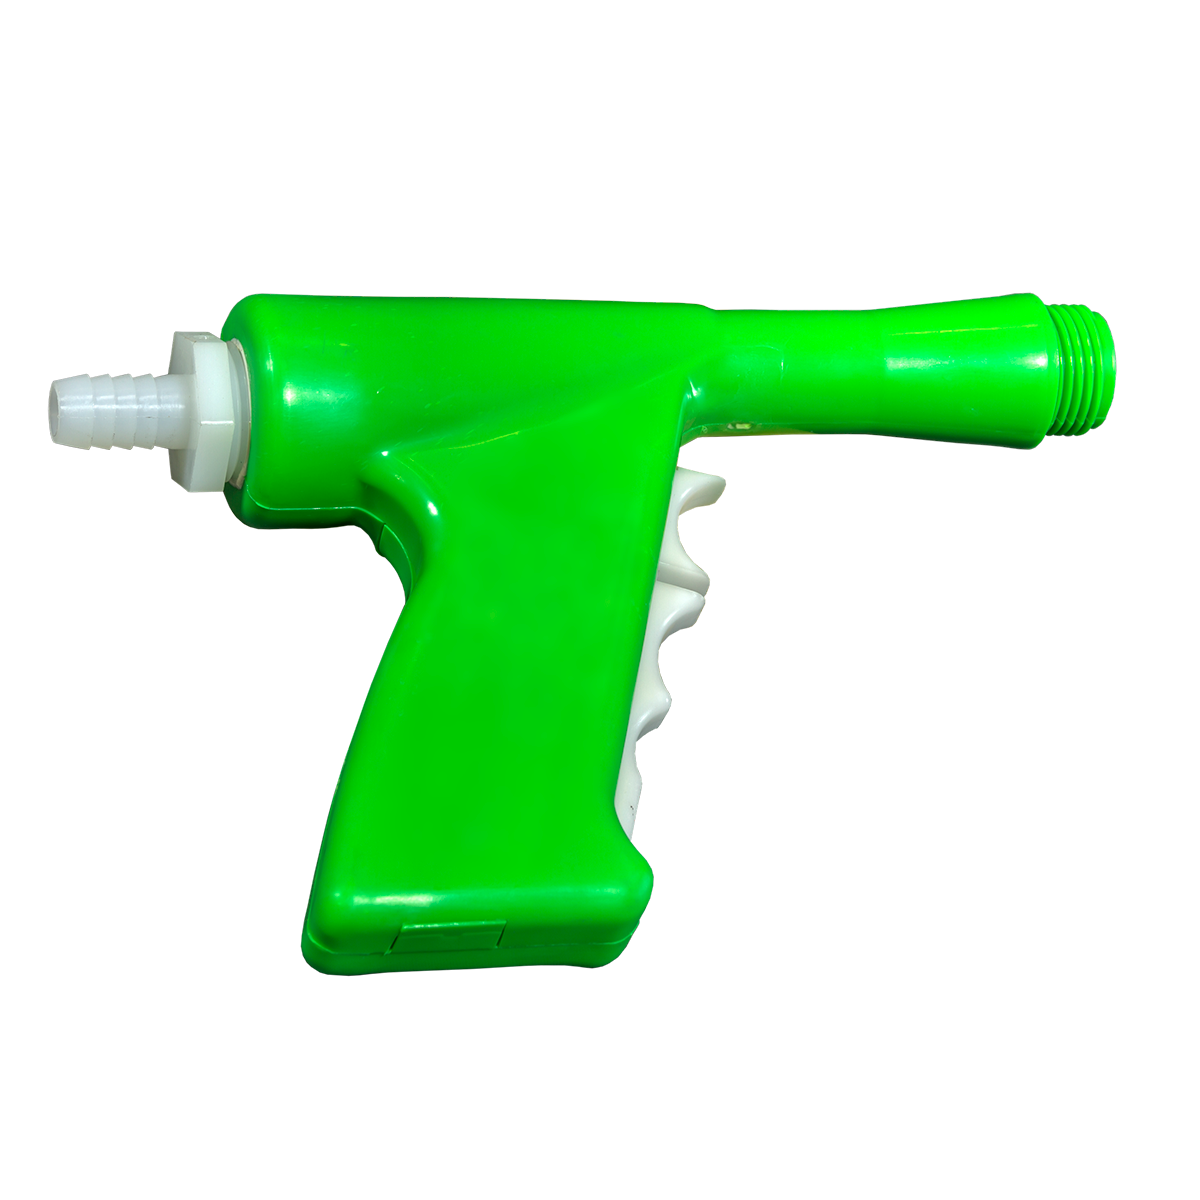 Lesco Chemlawn Spray Gun (Less Tip)